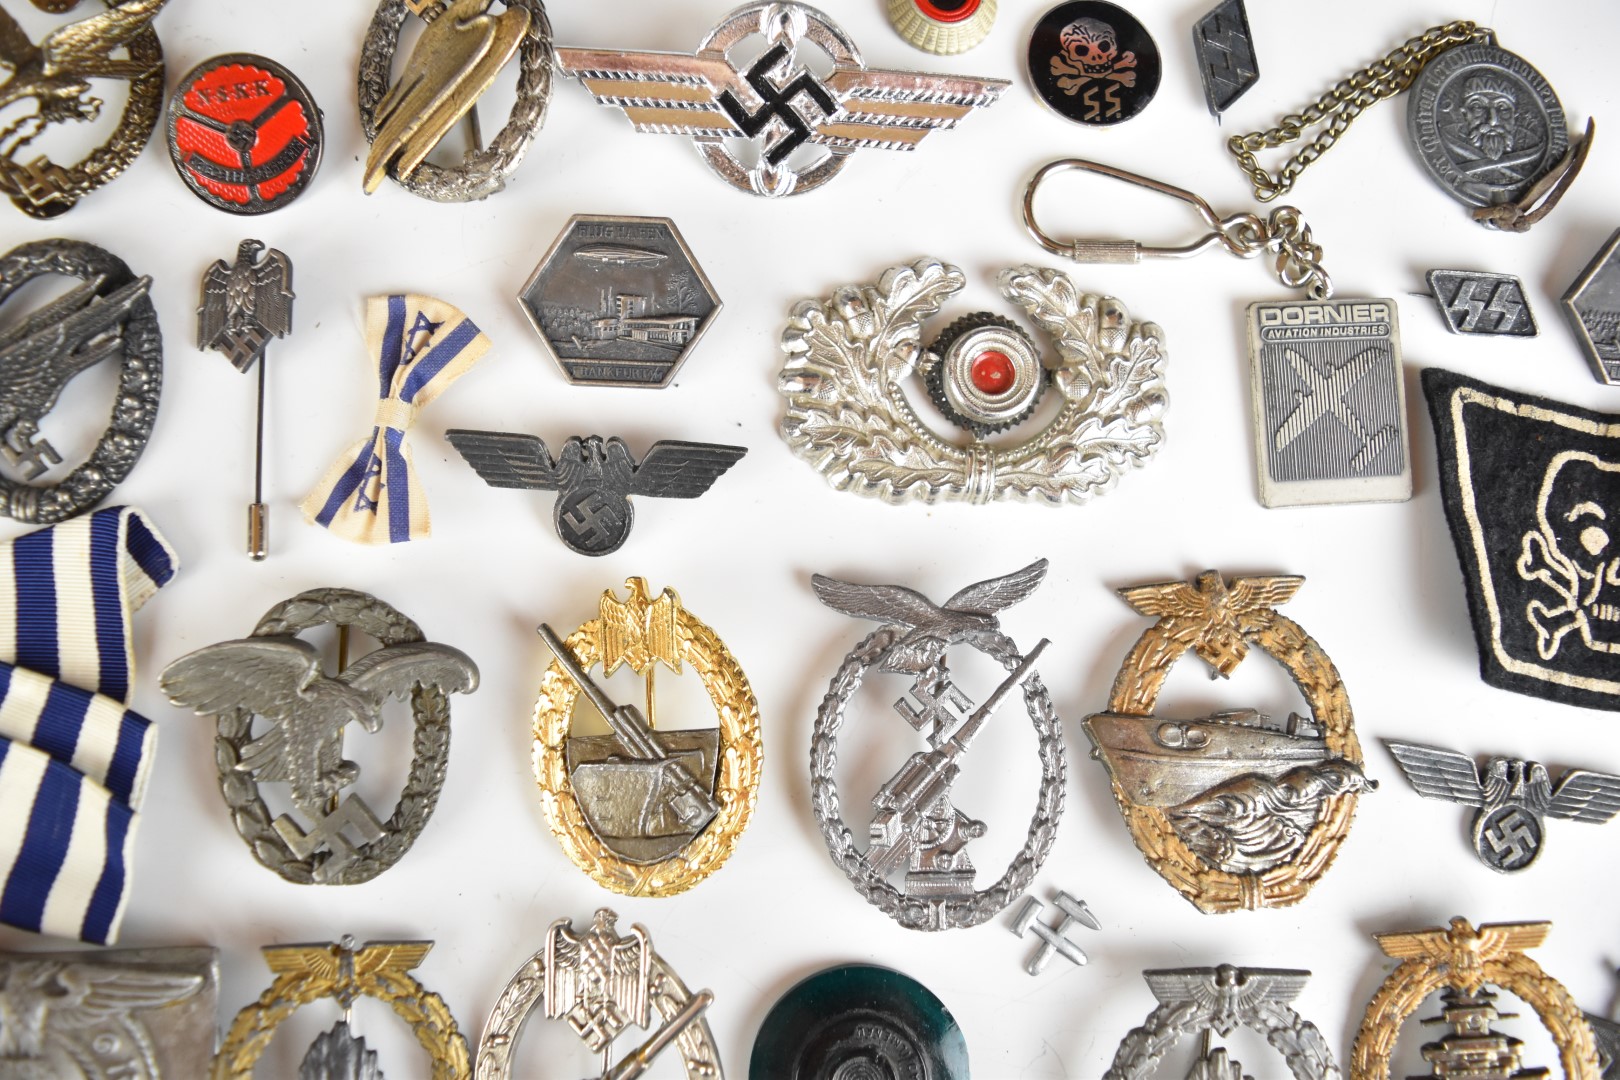 Replica German WW2 Nazi Third Reich badges, insignia and medals including High Seas Fleet, Artillery - Image 11 of 16